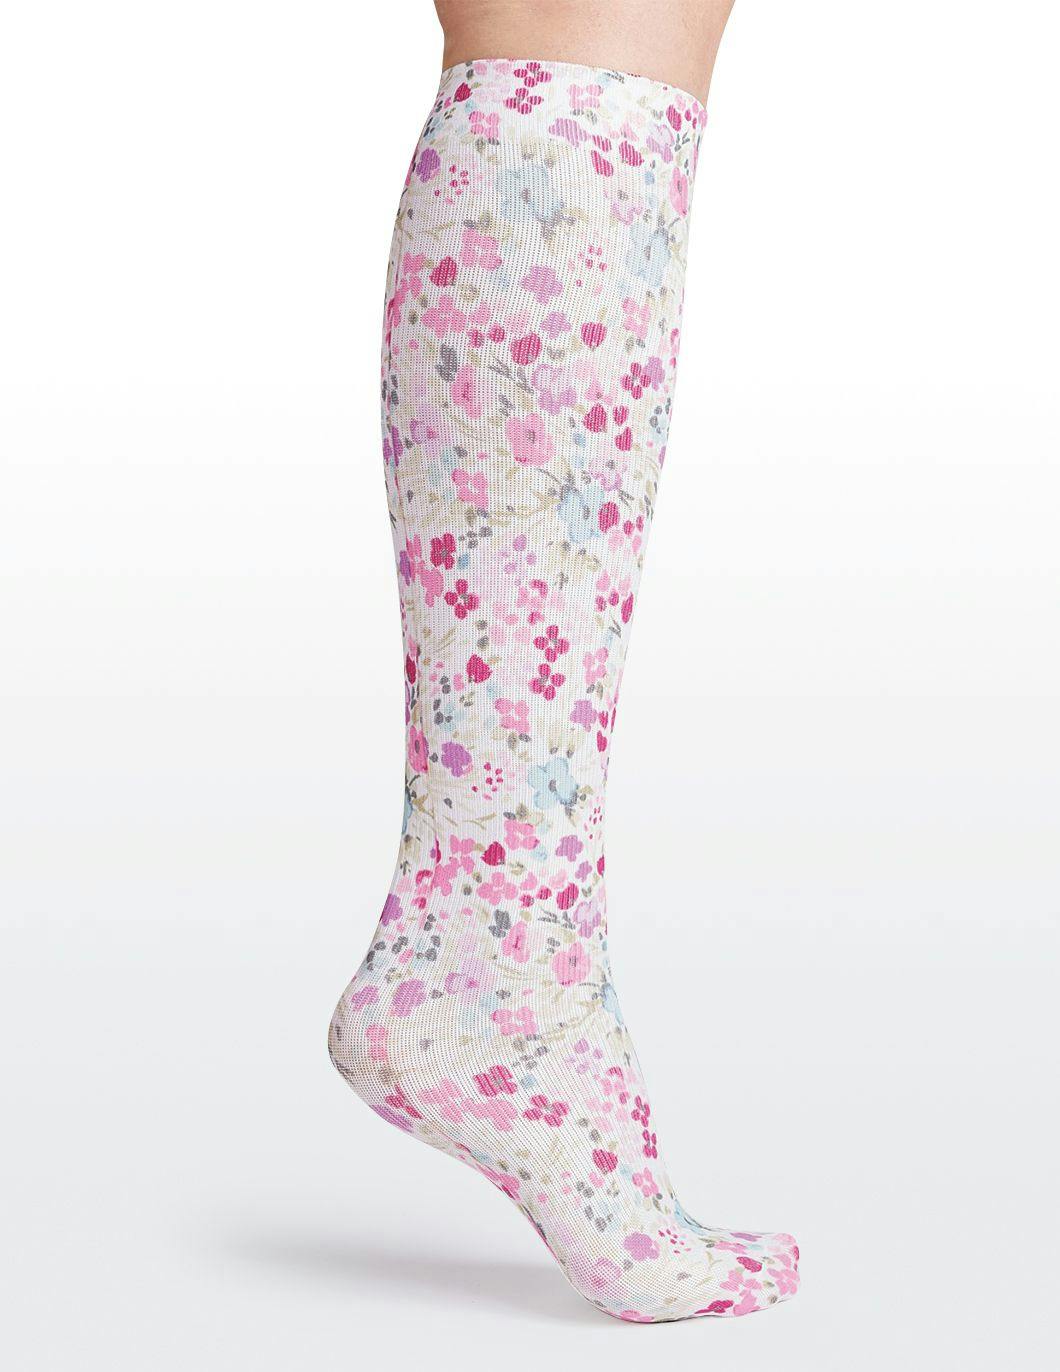 cutieful-compression-socks-8-15-mmhg-painted-flowers